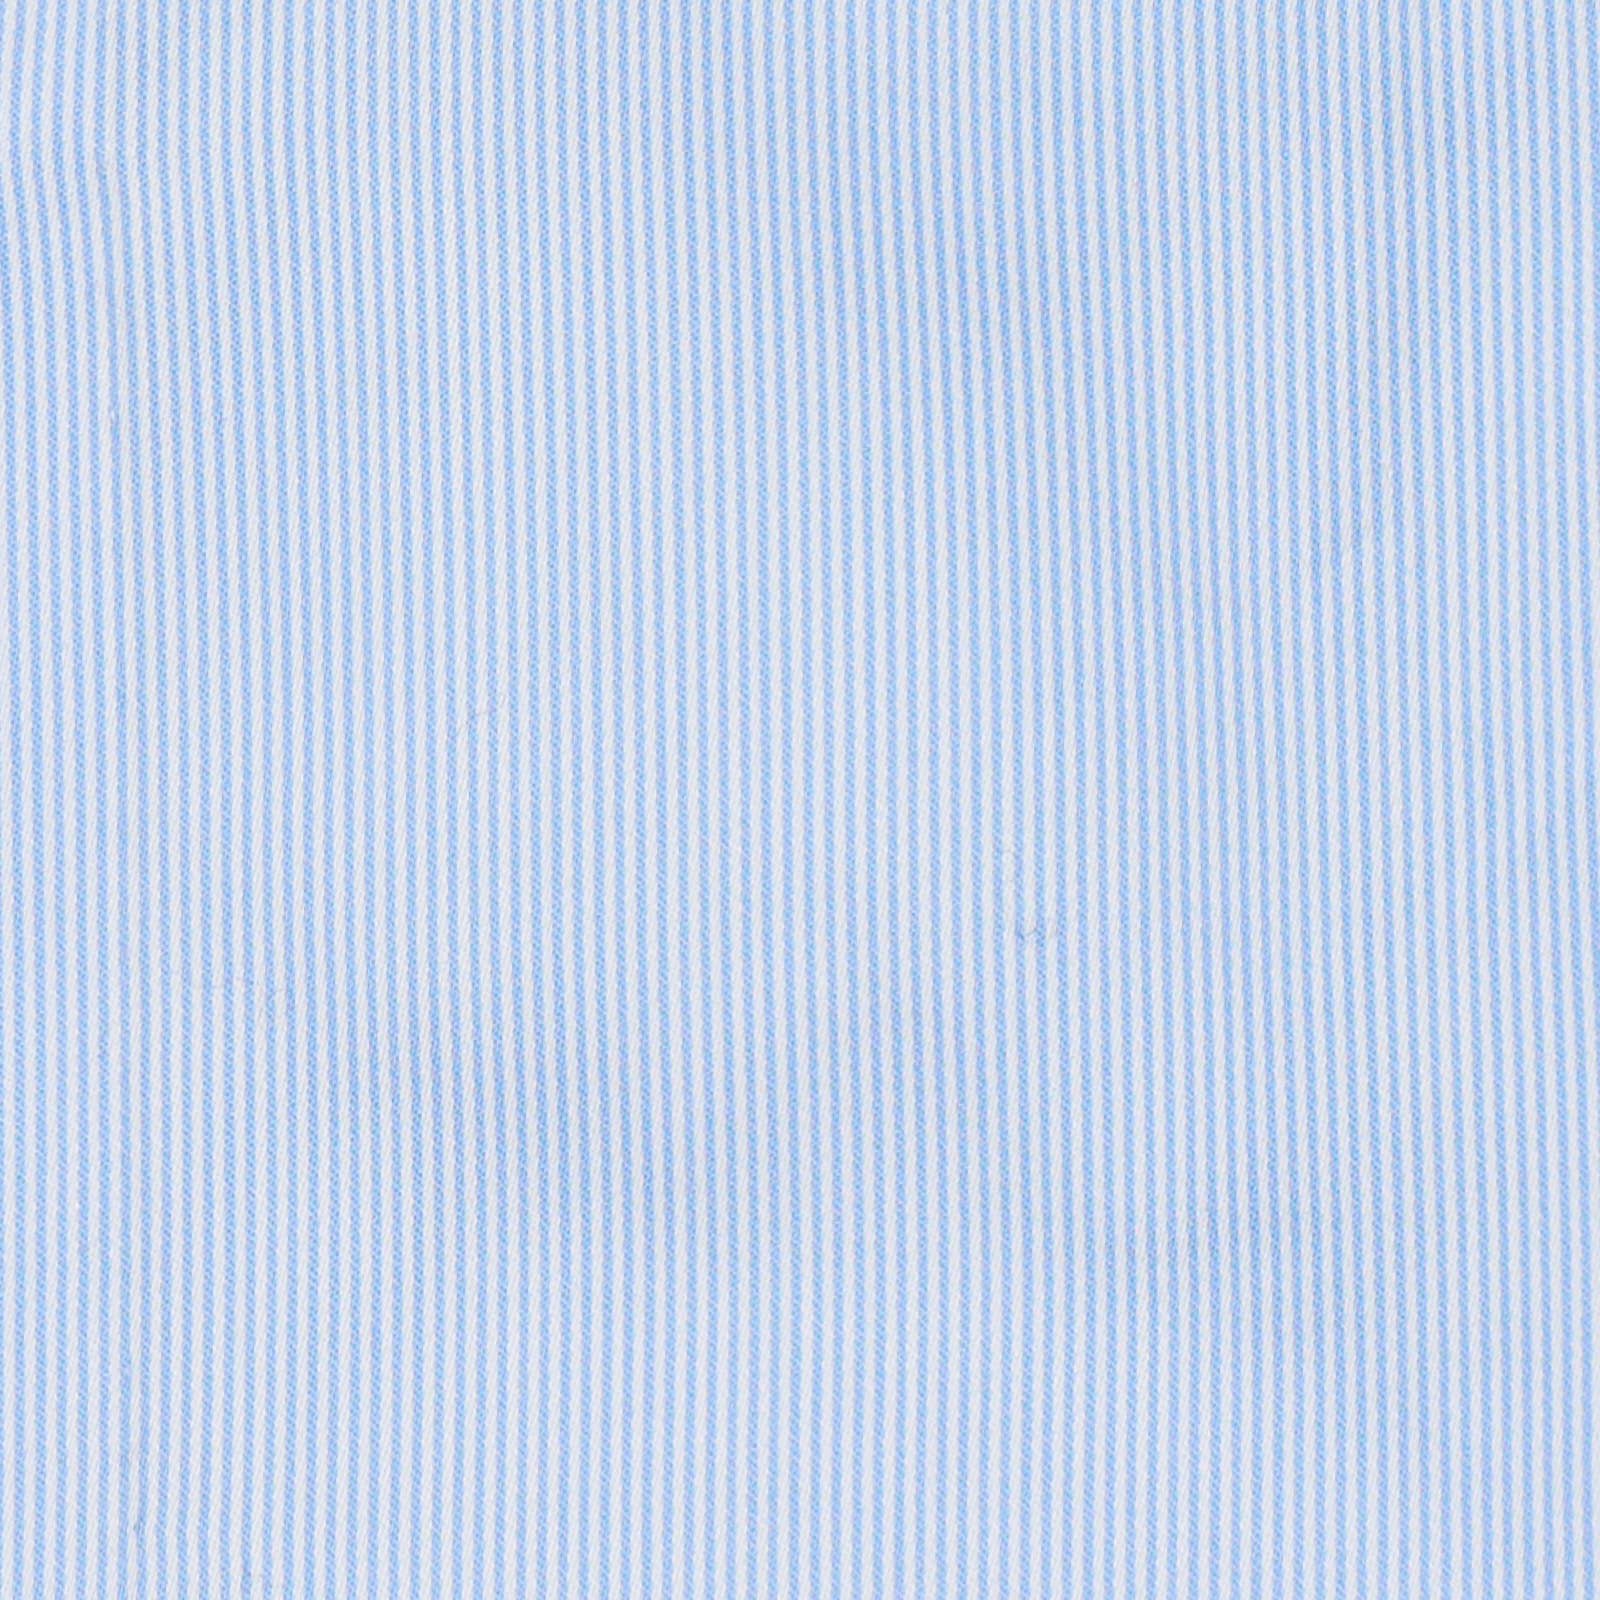 VINCENZO DI RUGGIERO Custom Made Blue Striped French Cuff Dress Shirt XXXL